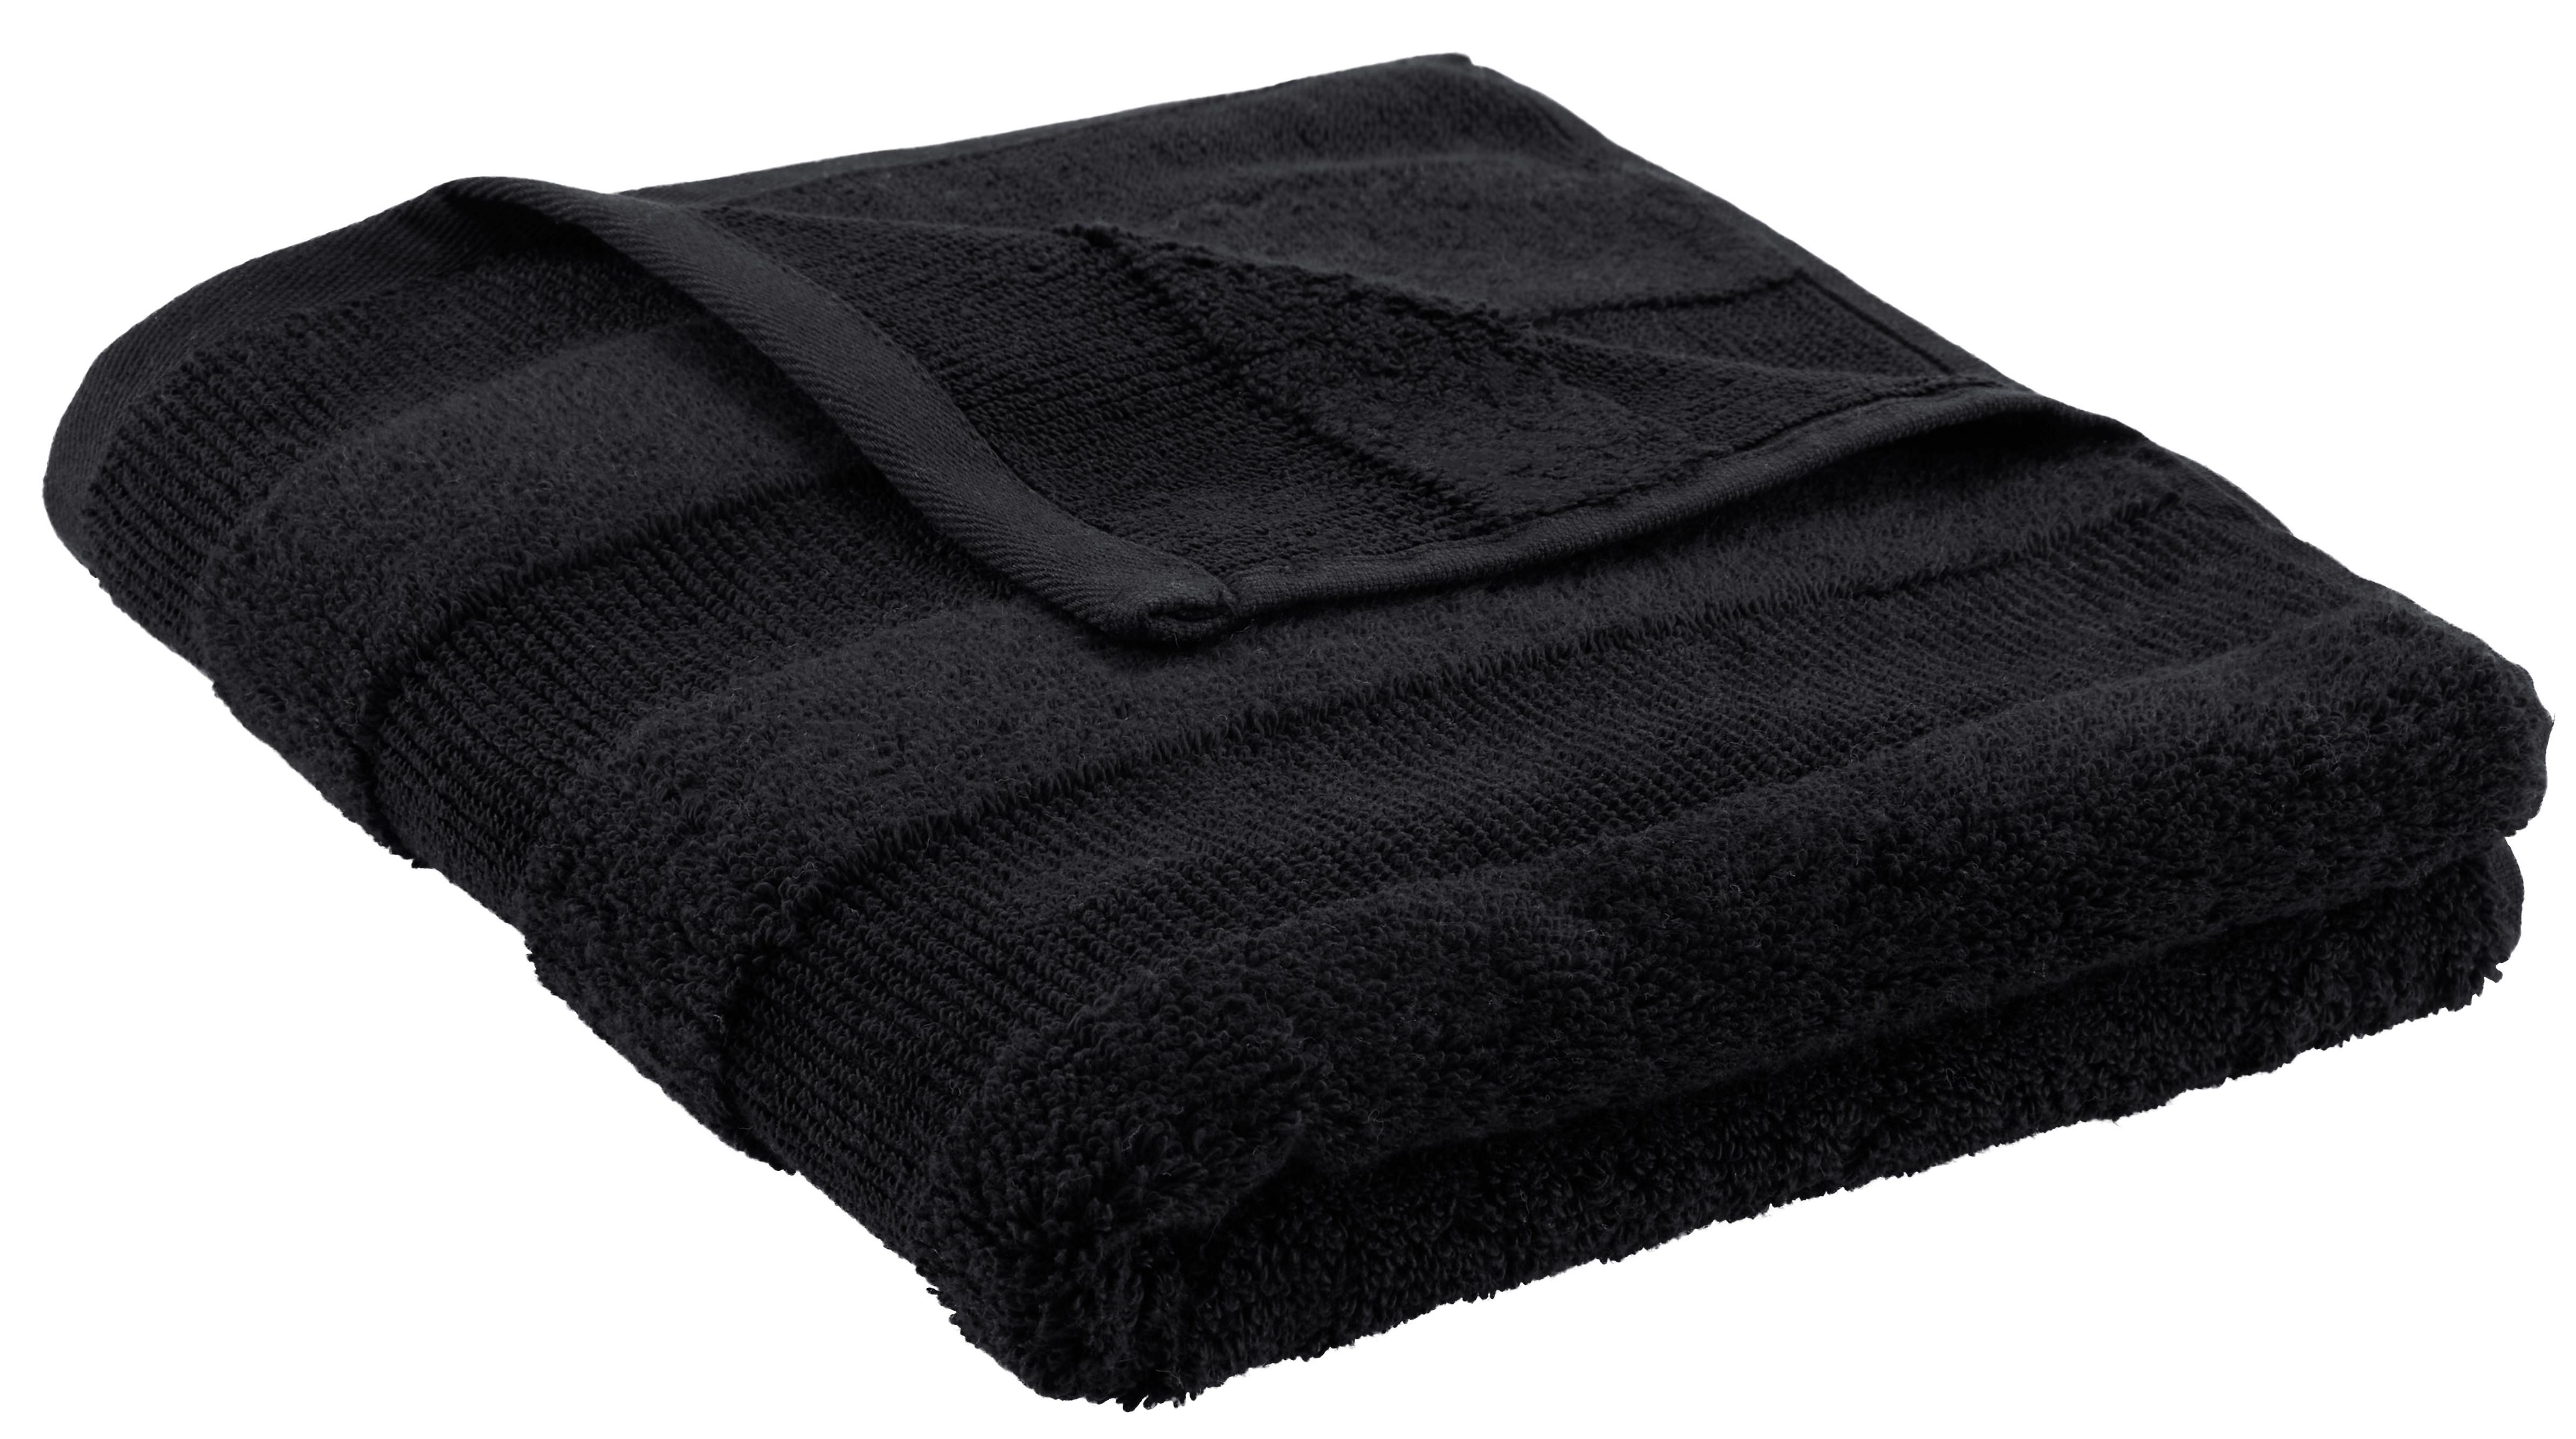 Brisača Chris - črna, tekstil (50/100cm) - Premium Living